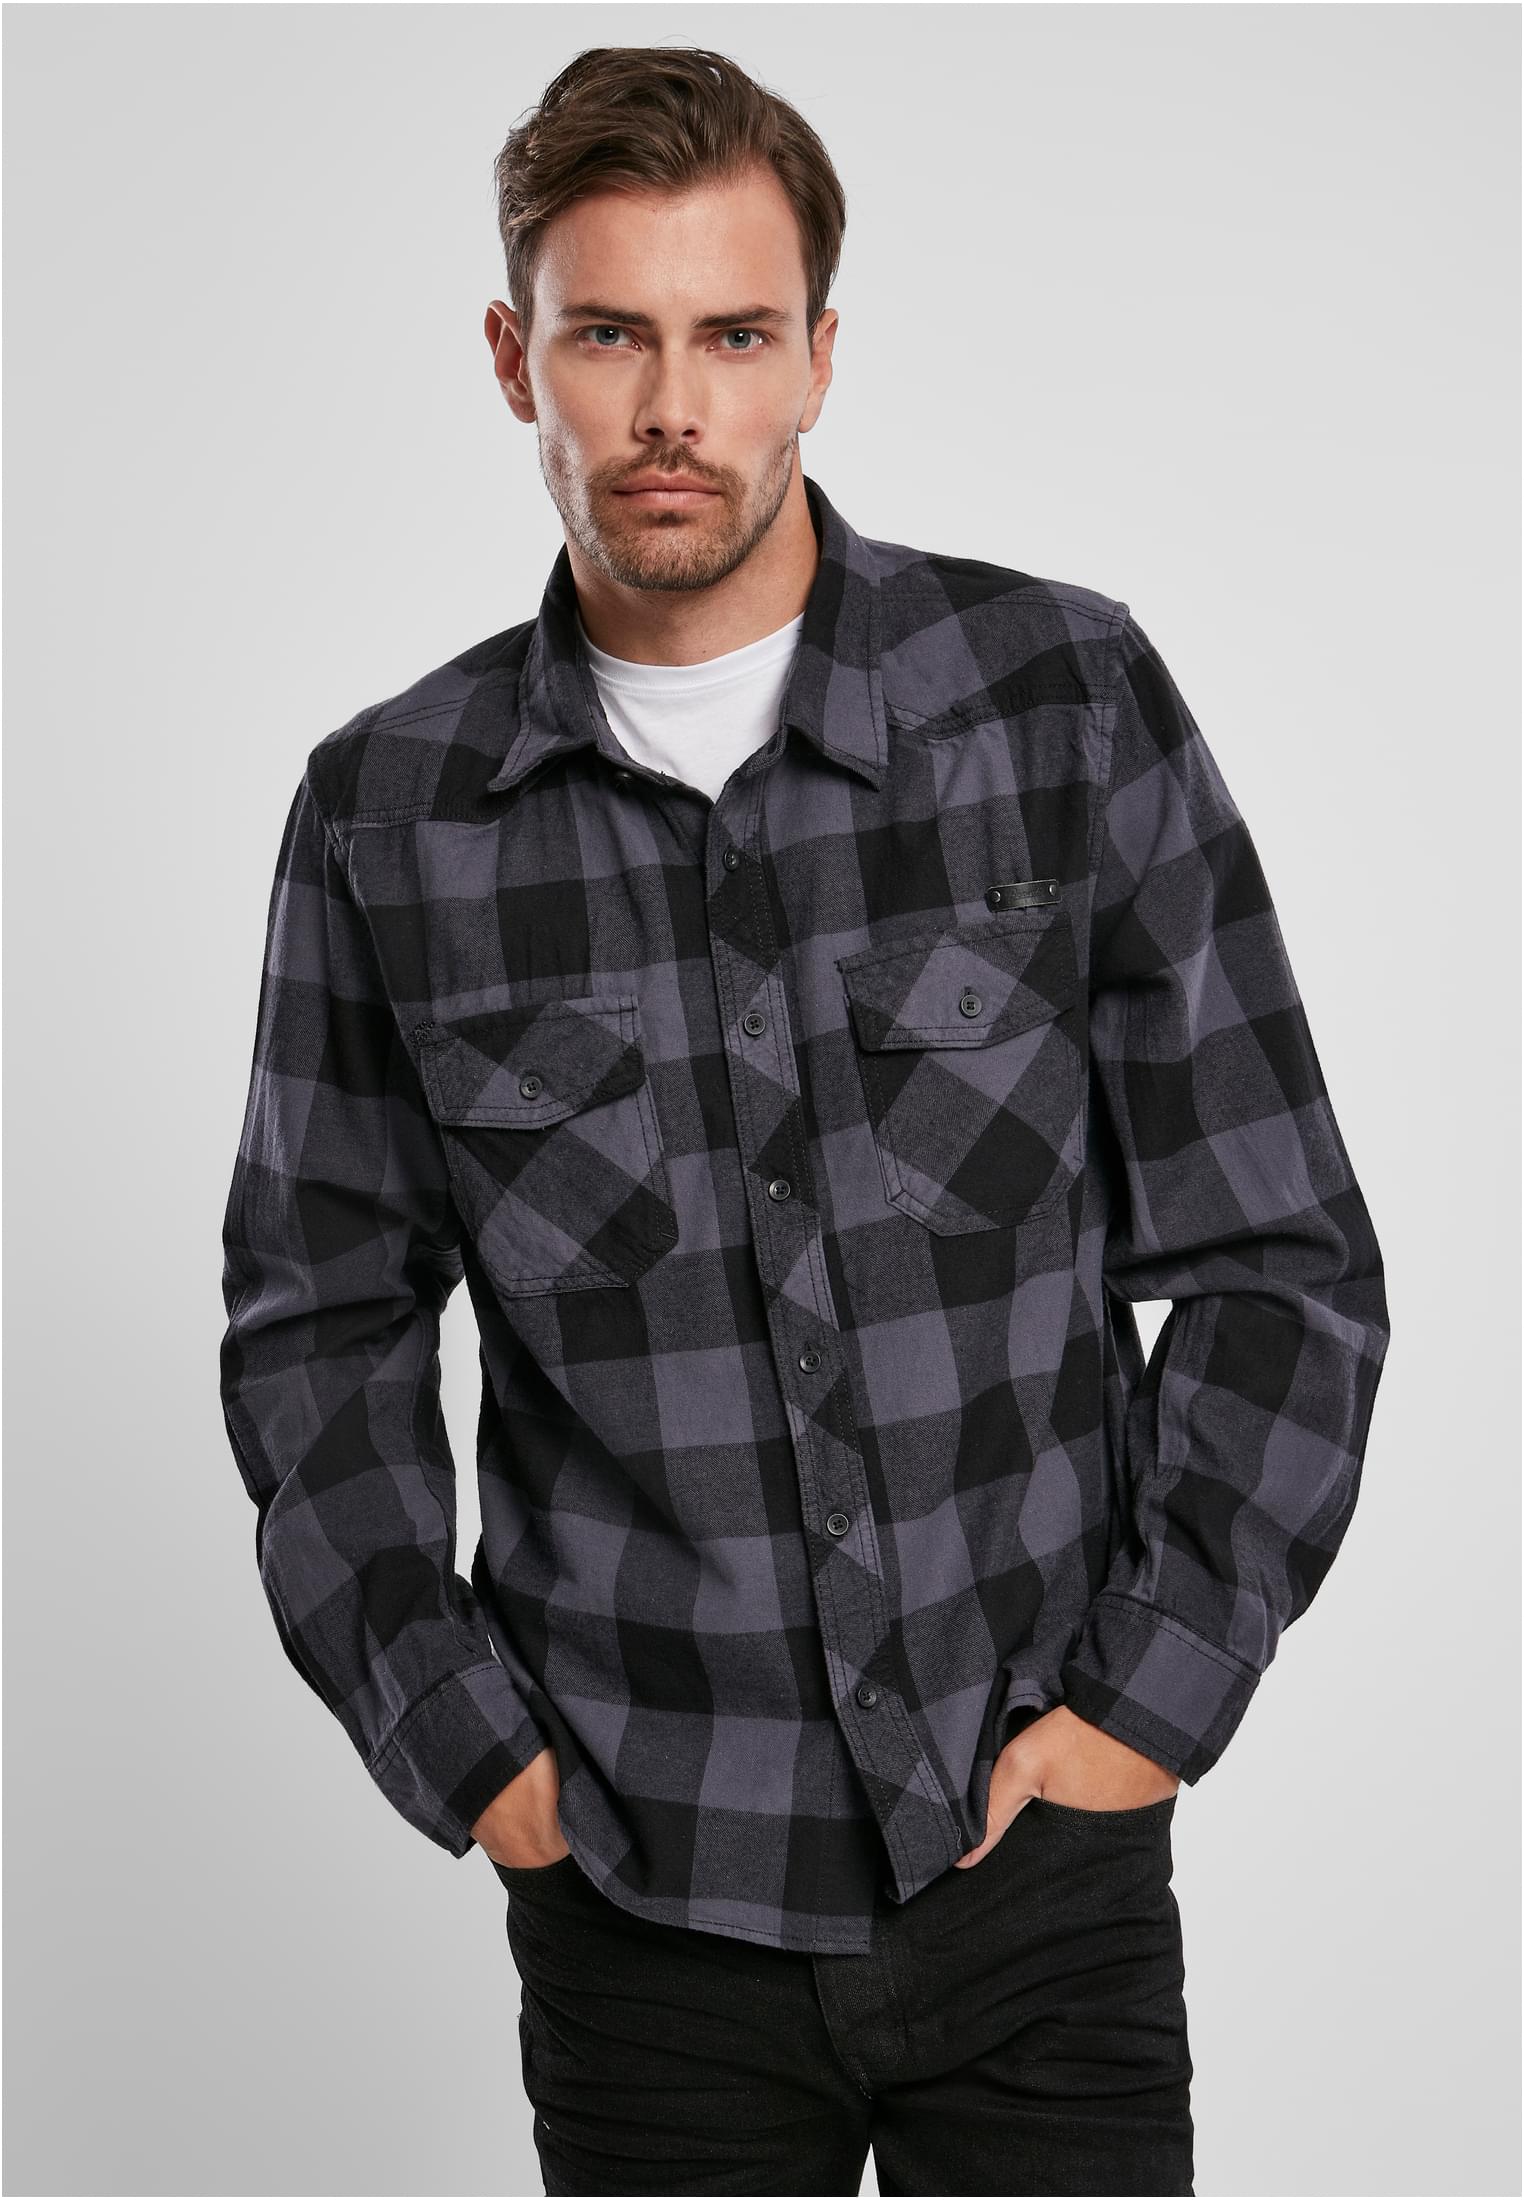 Jacken Checked Shirt in Farbe black/grey